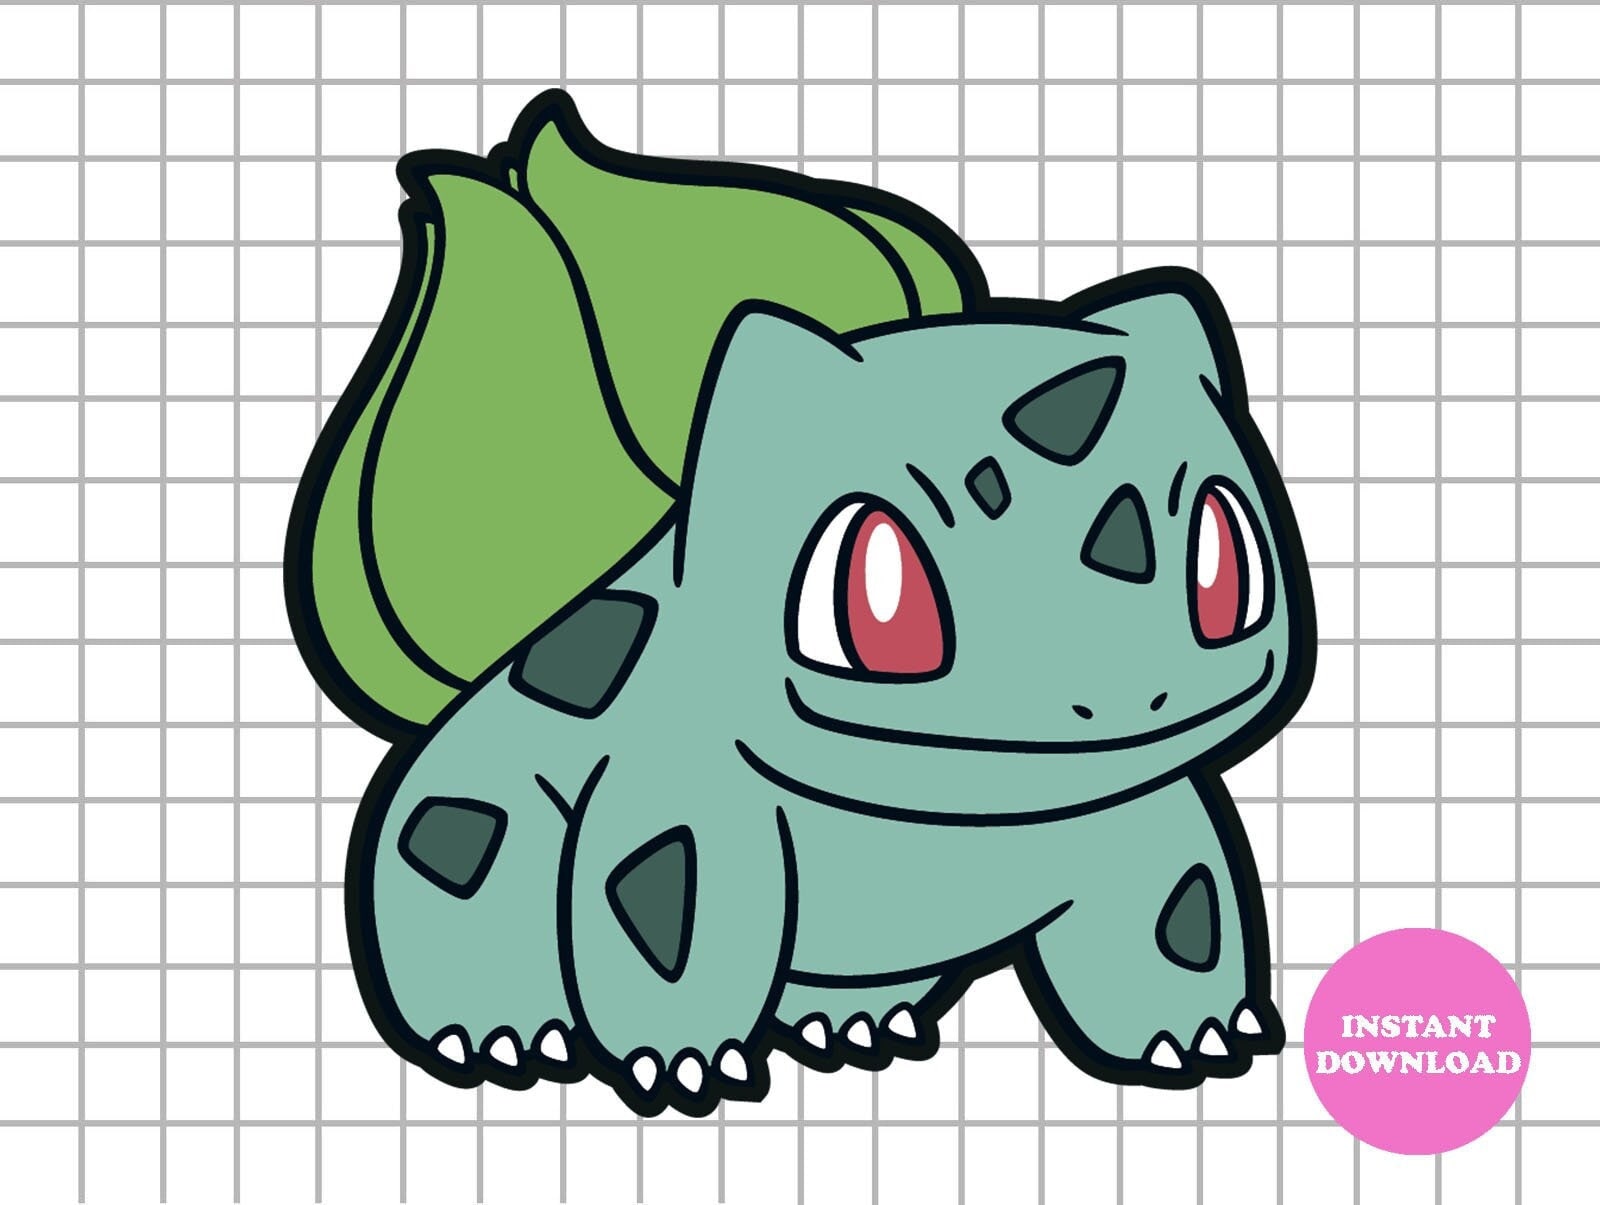 Pokeball SVG PNG Pokemon Vector Bundle - For Cricut, Prints, and  Scrapbooking! - Payhip